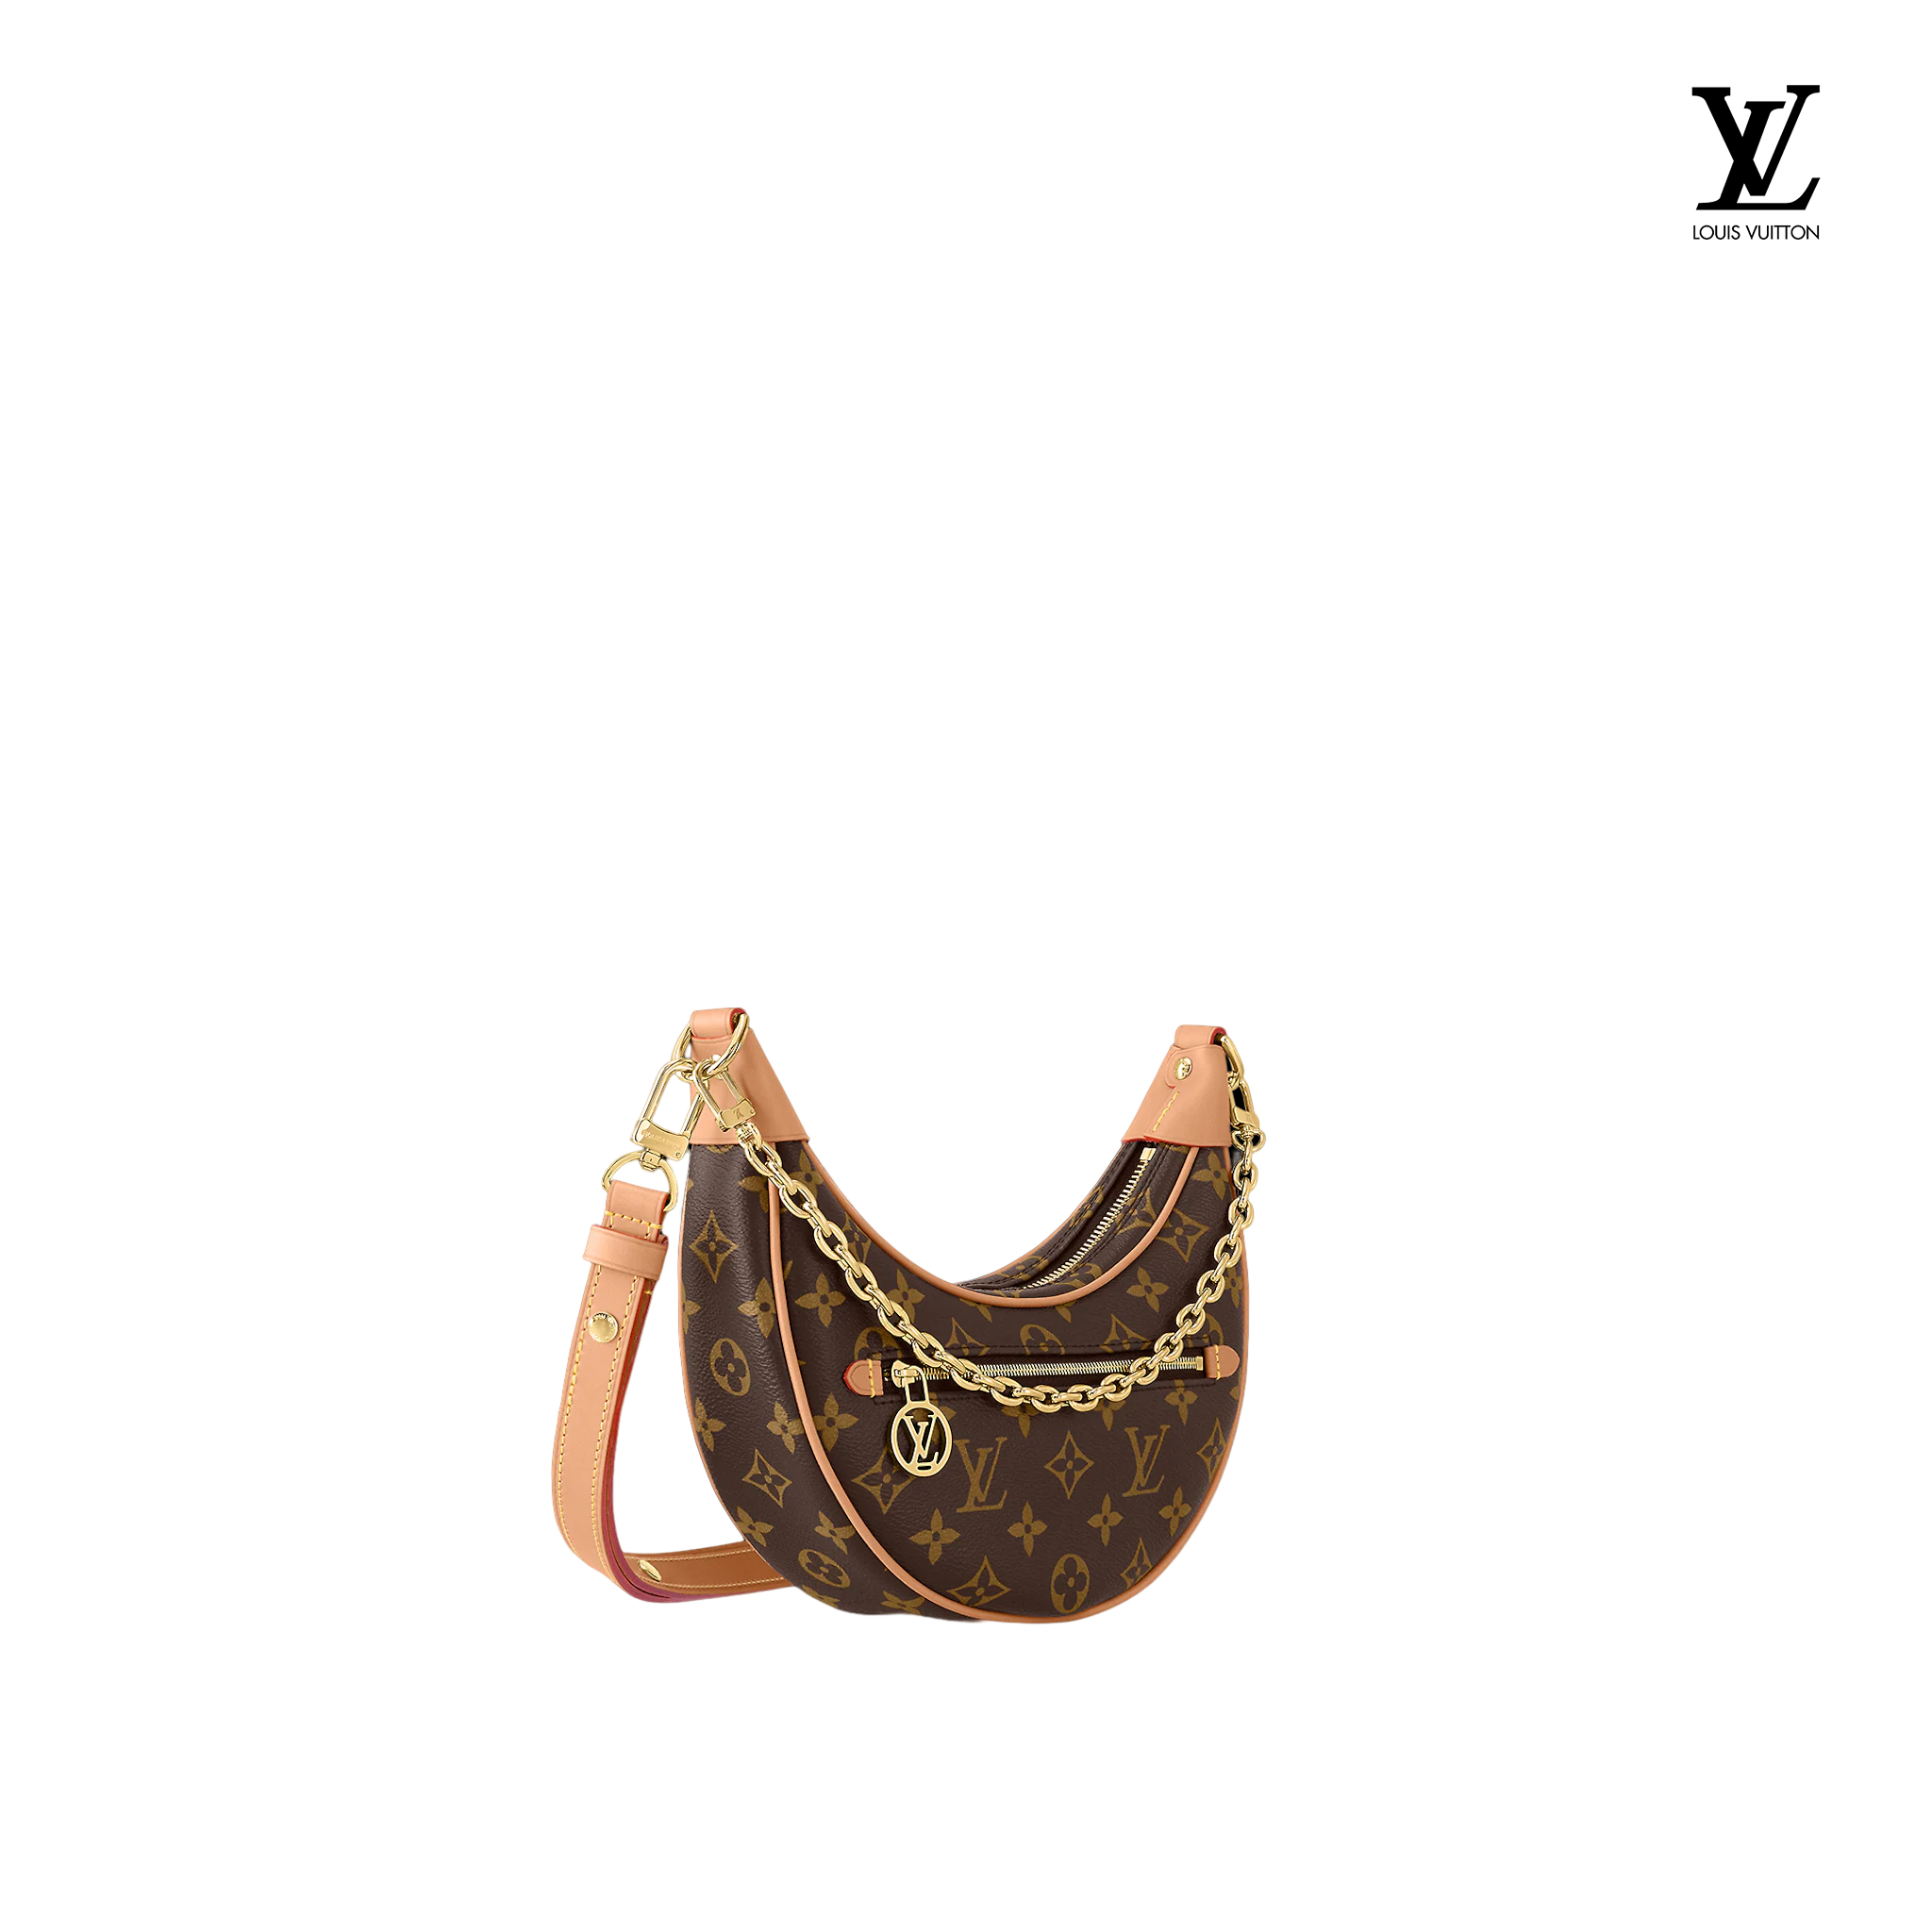 80%OFF!Louis Vuitton Loop Baguette Pea Bag - Handy Shoulder Bag